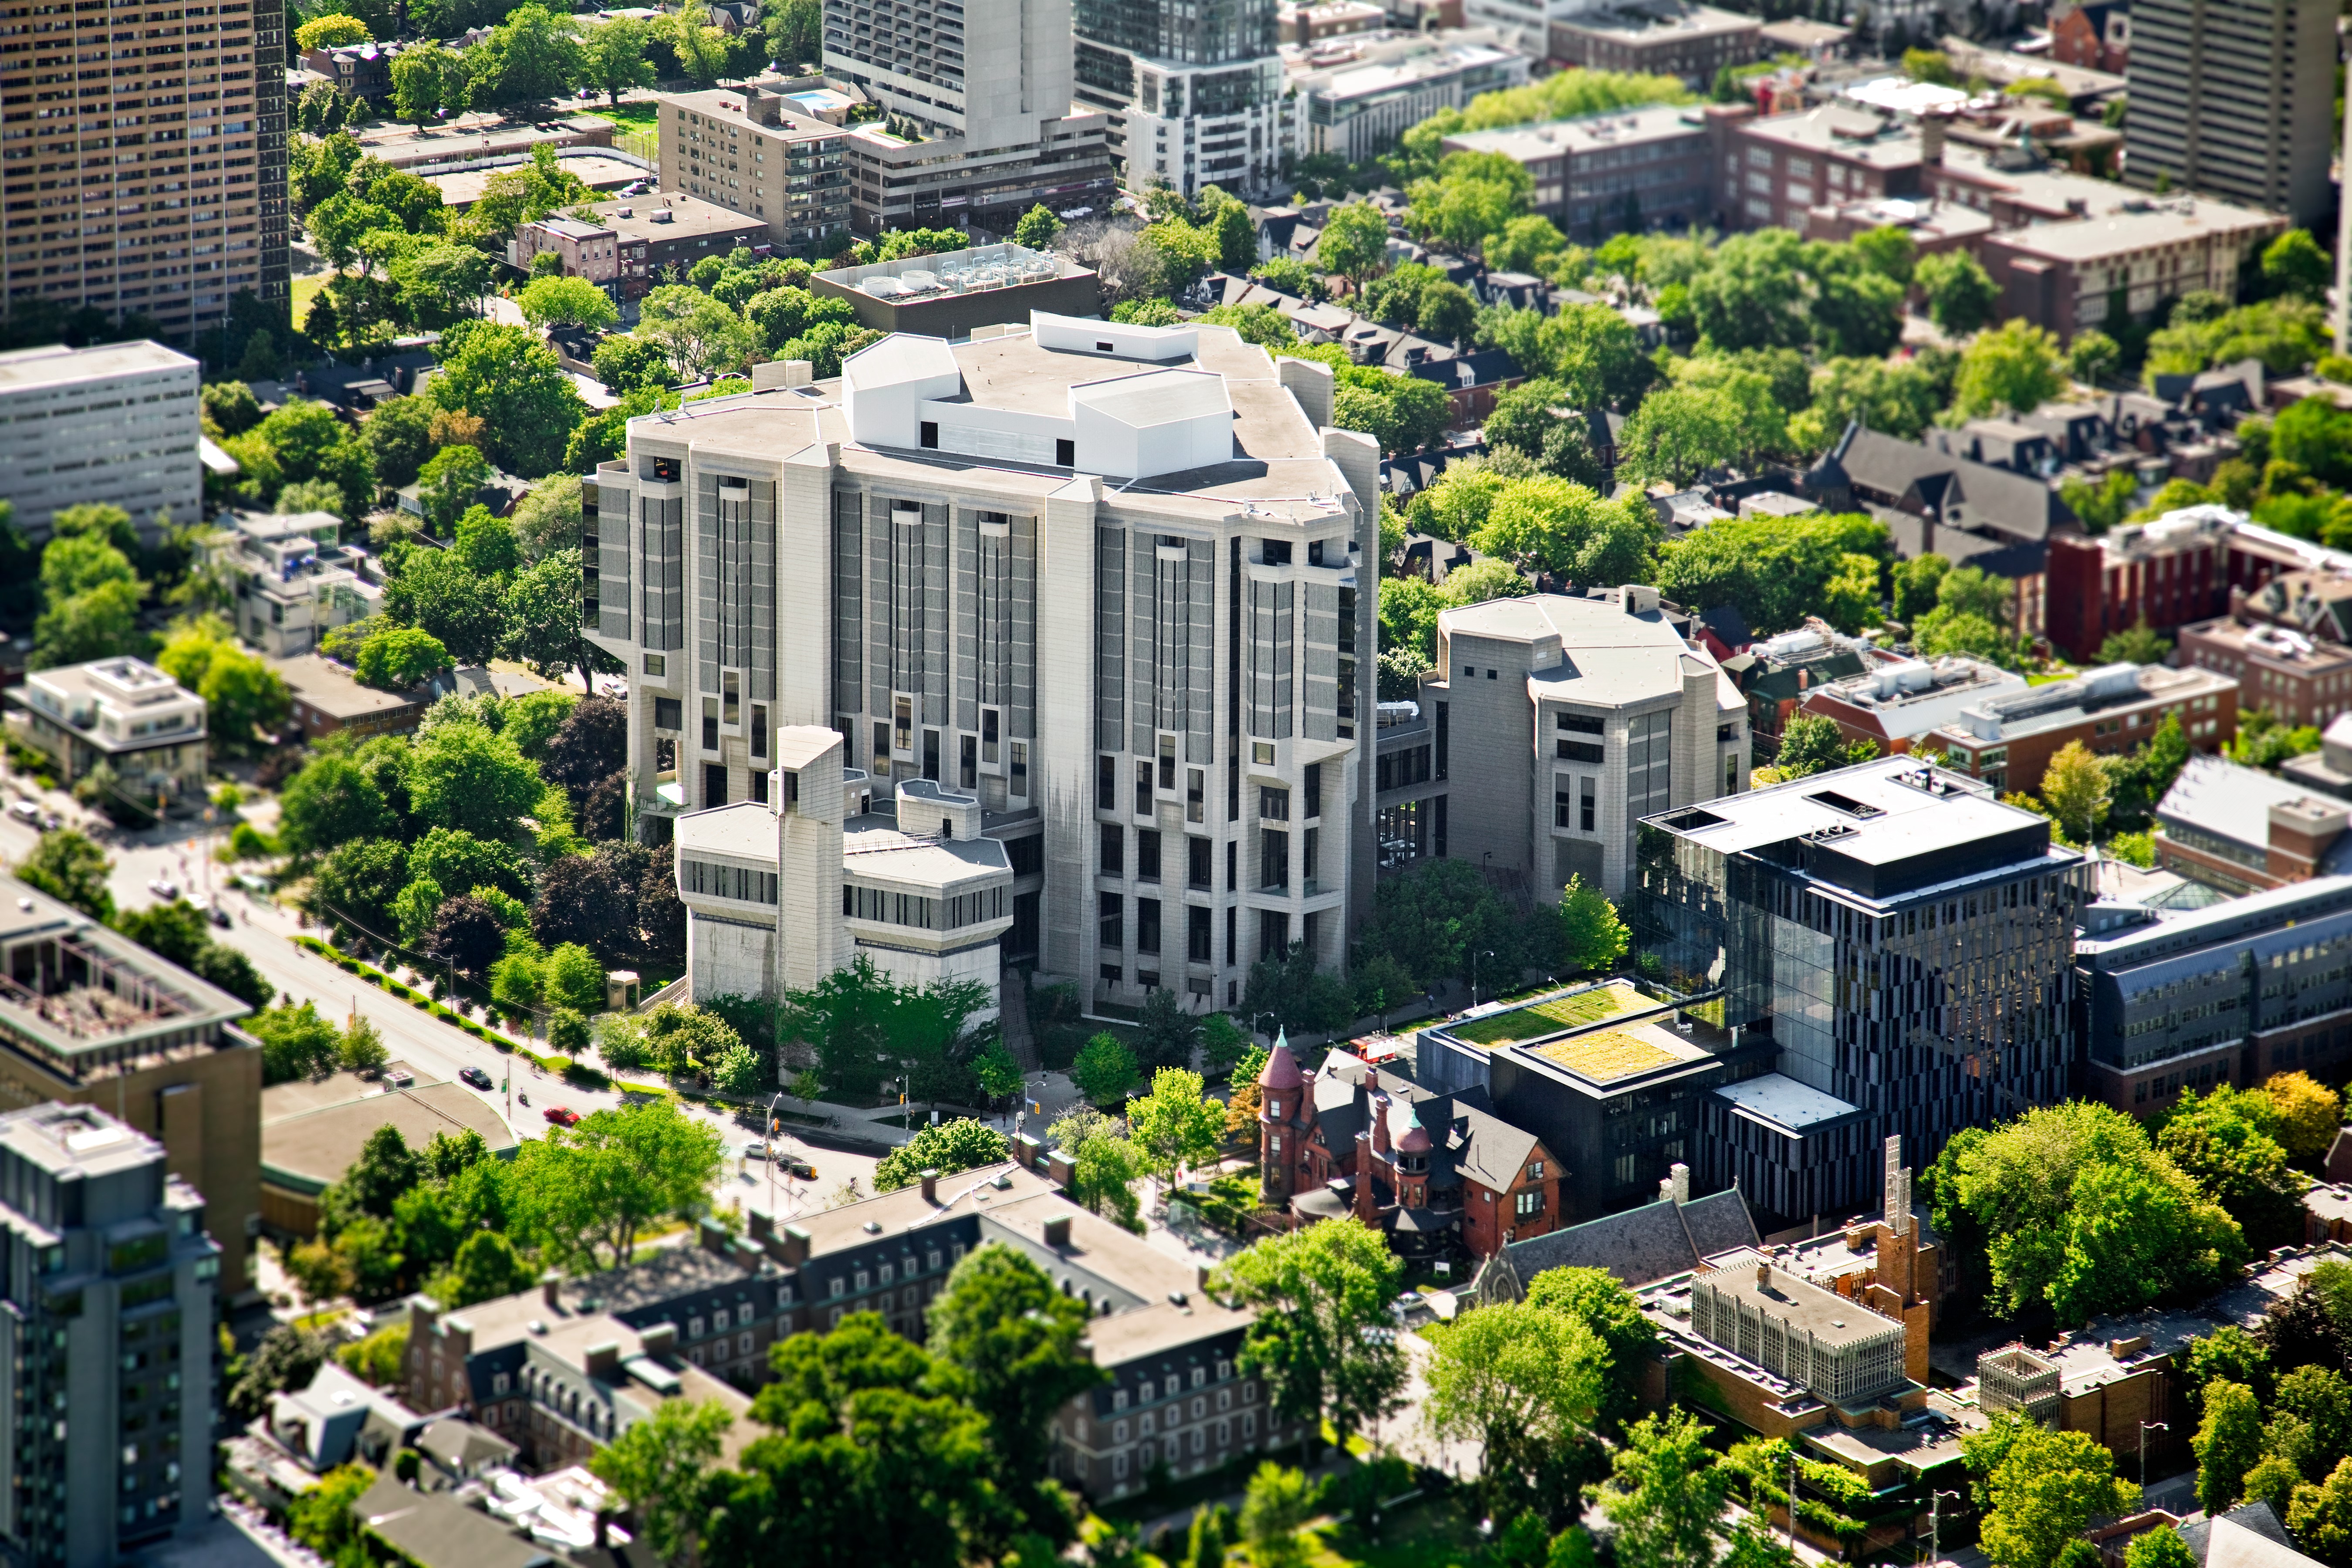 aerial view of St. George campus